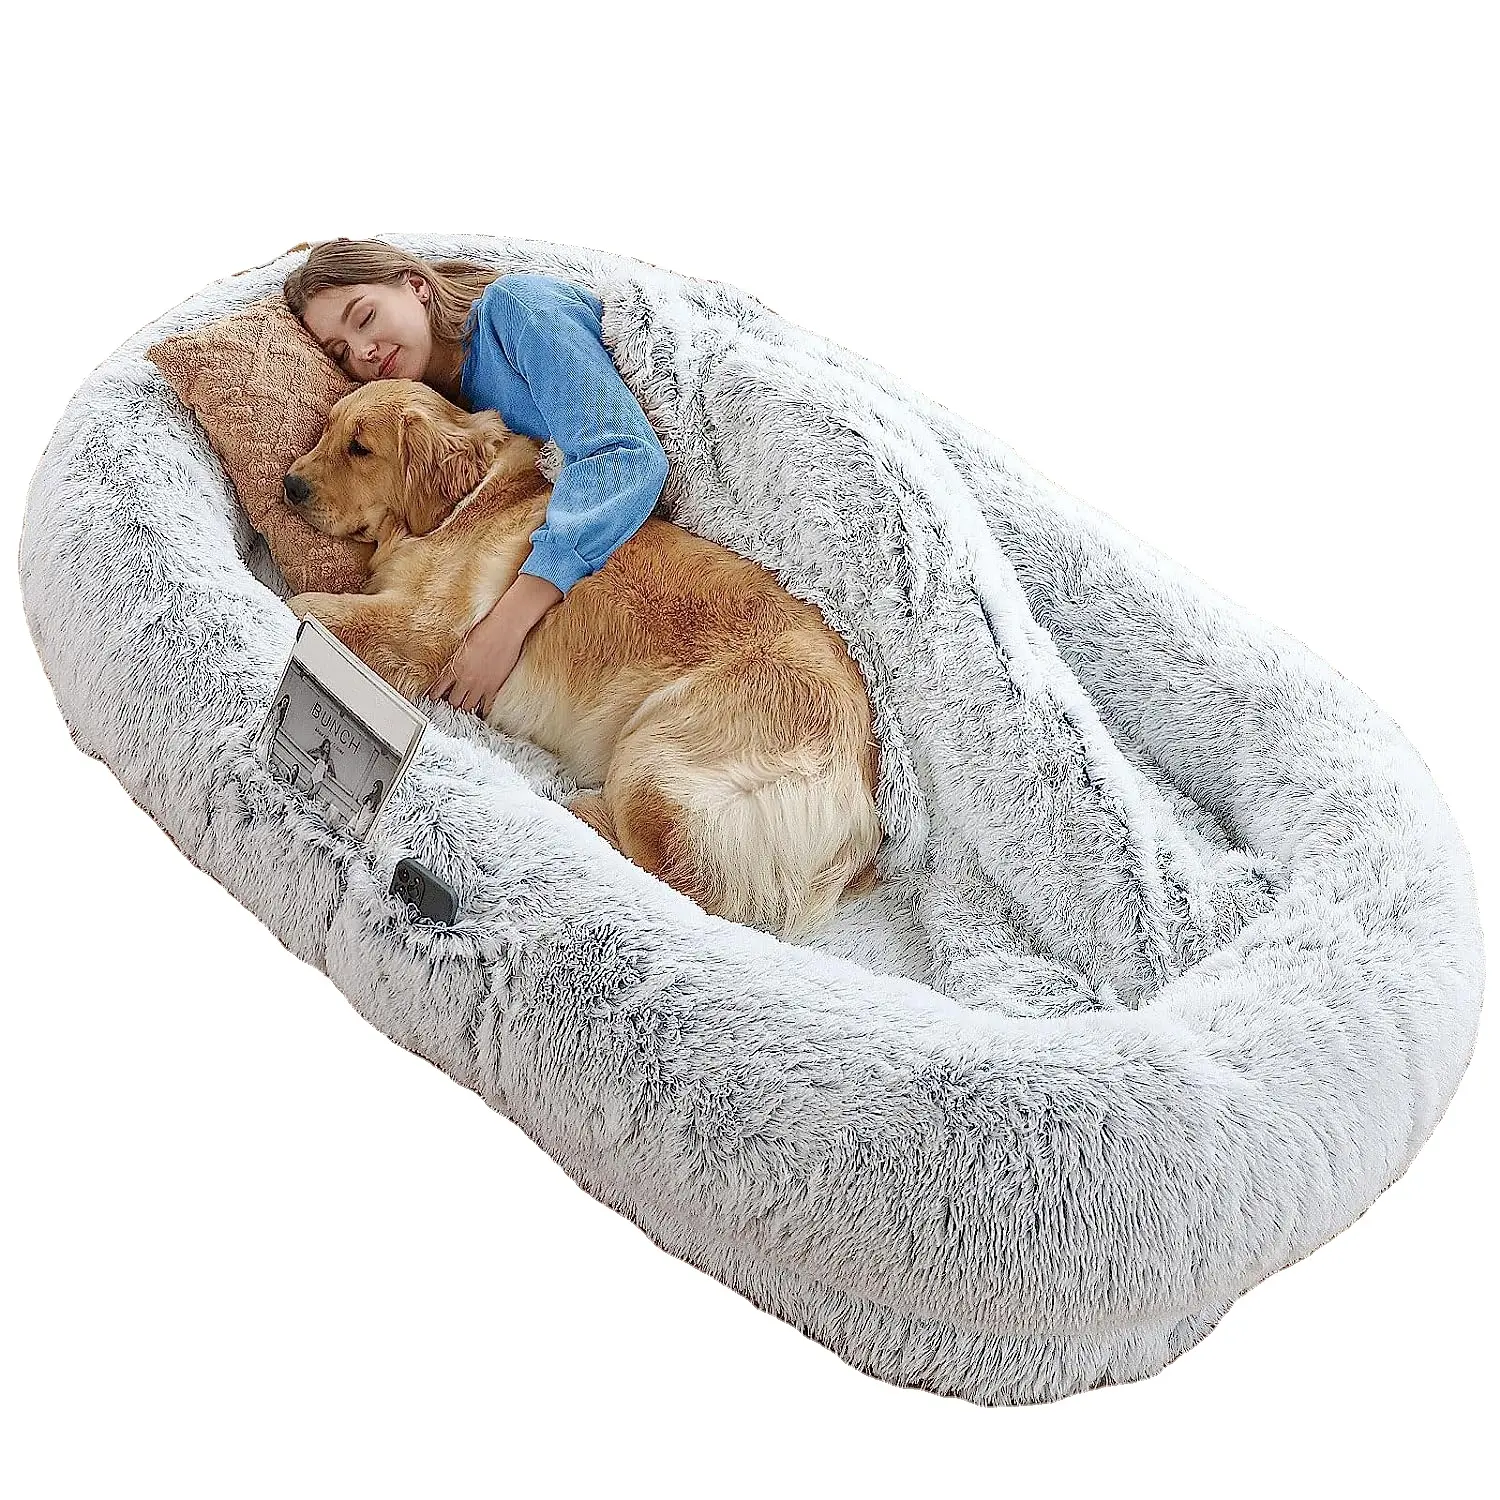 2023 baru dapat dicuci busa memori ekstra besar tempat tidur anjing ukuran manusia anti-selip dapat dilepas 6XL tempat tidur anjing raksasa untuk anjing manusia besar